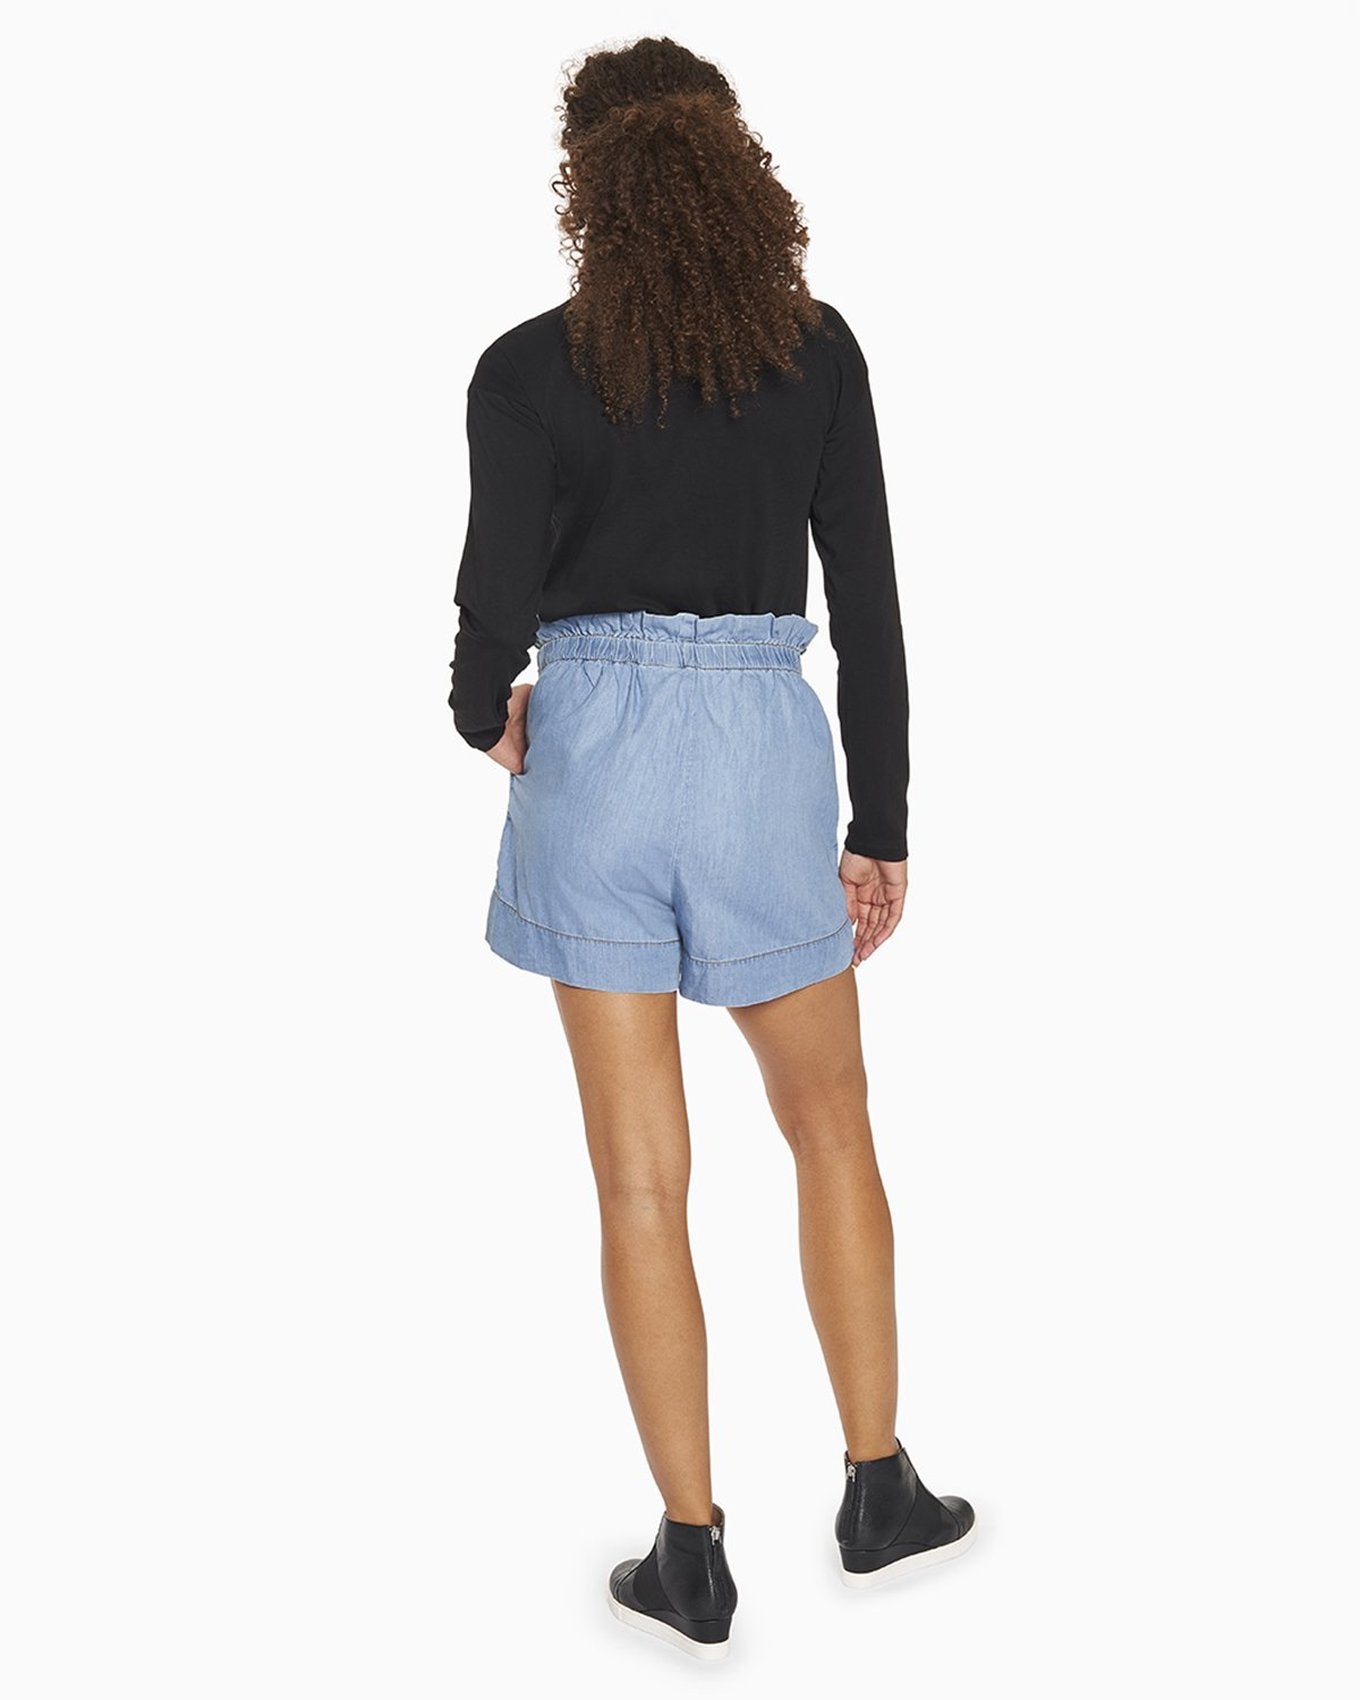 YesAnd Organic Denim Paperbag Short Short in color Denim Light and shape shorts